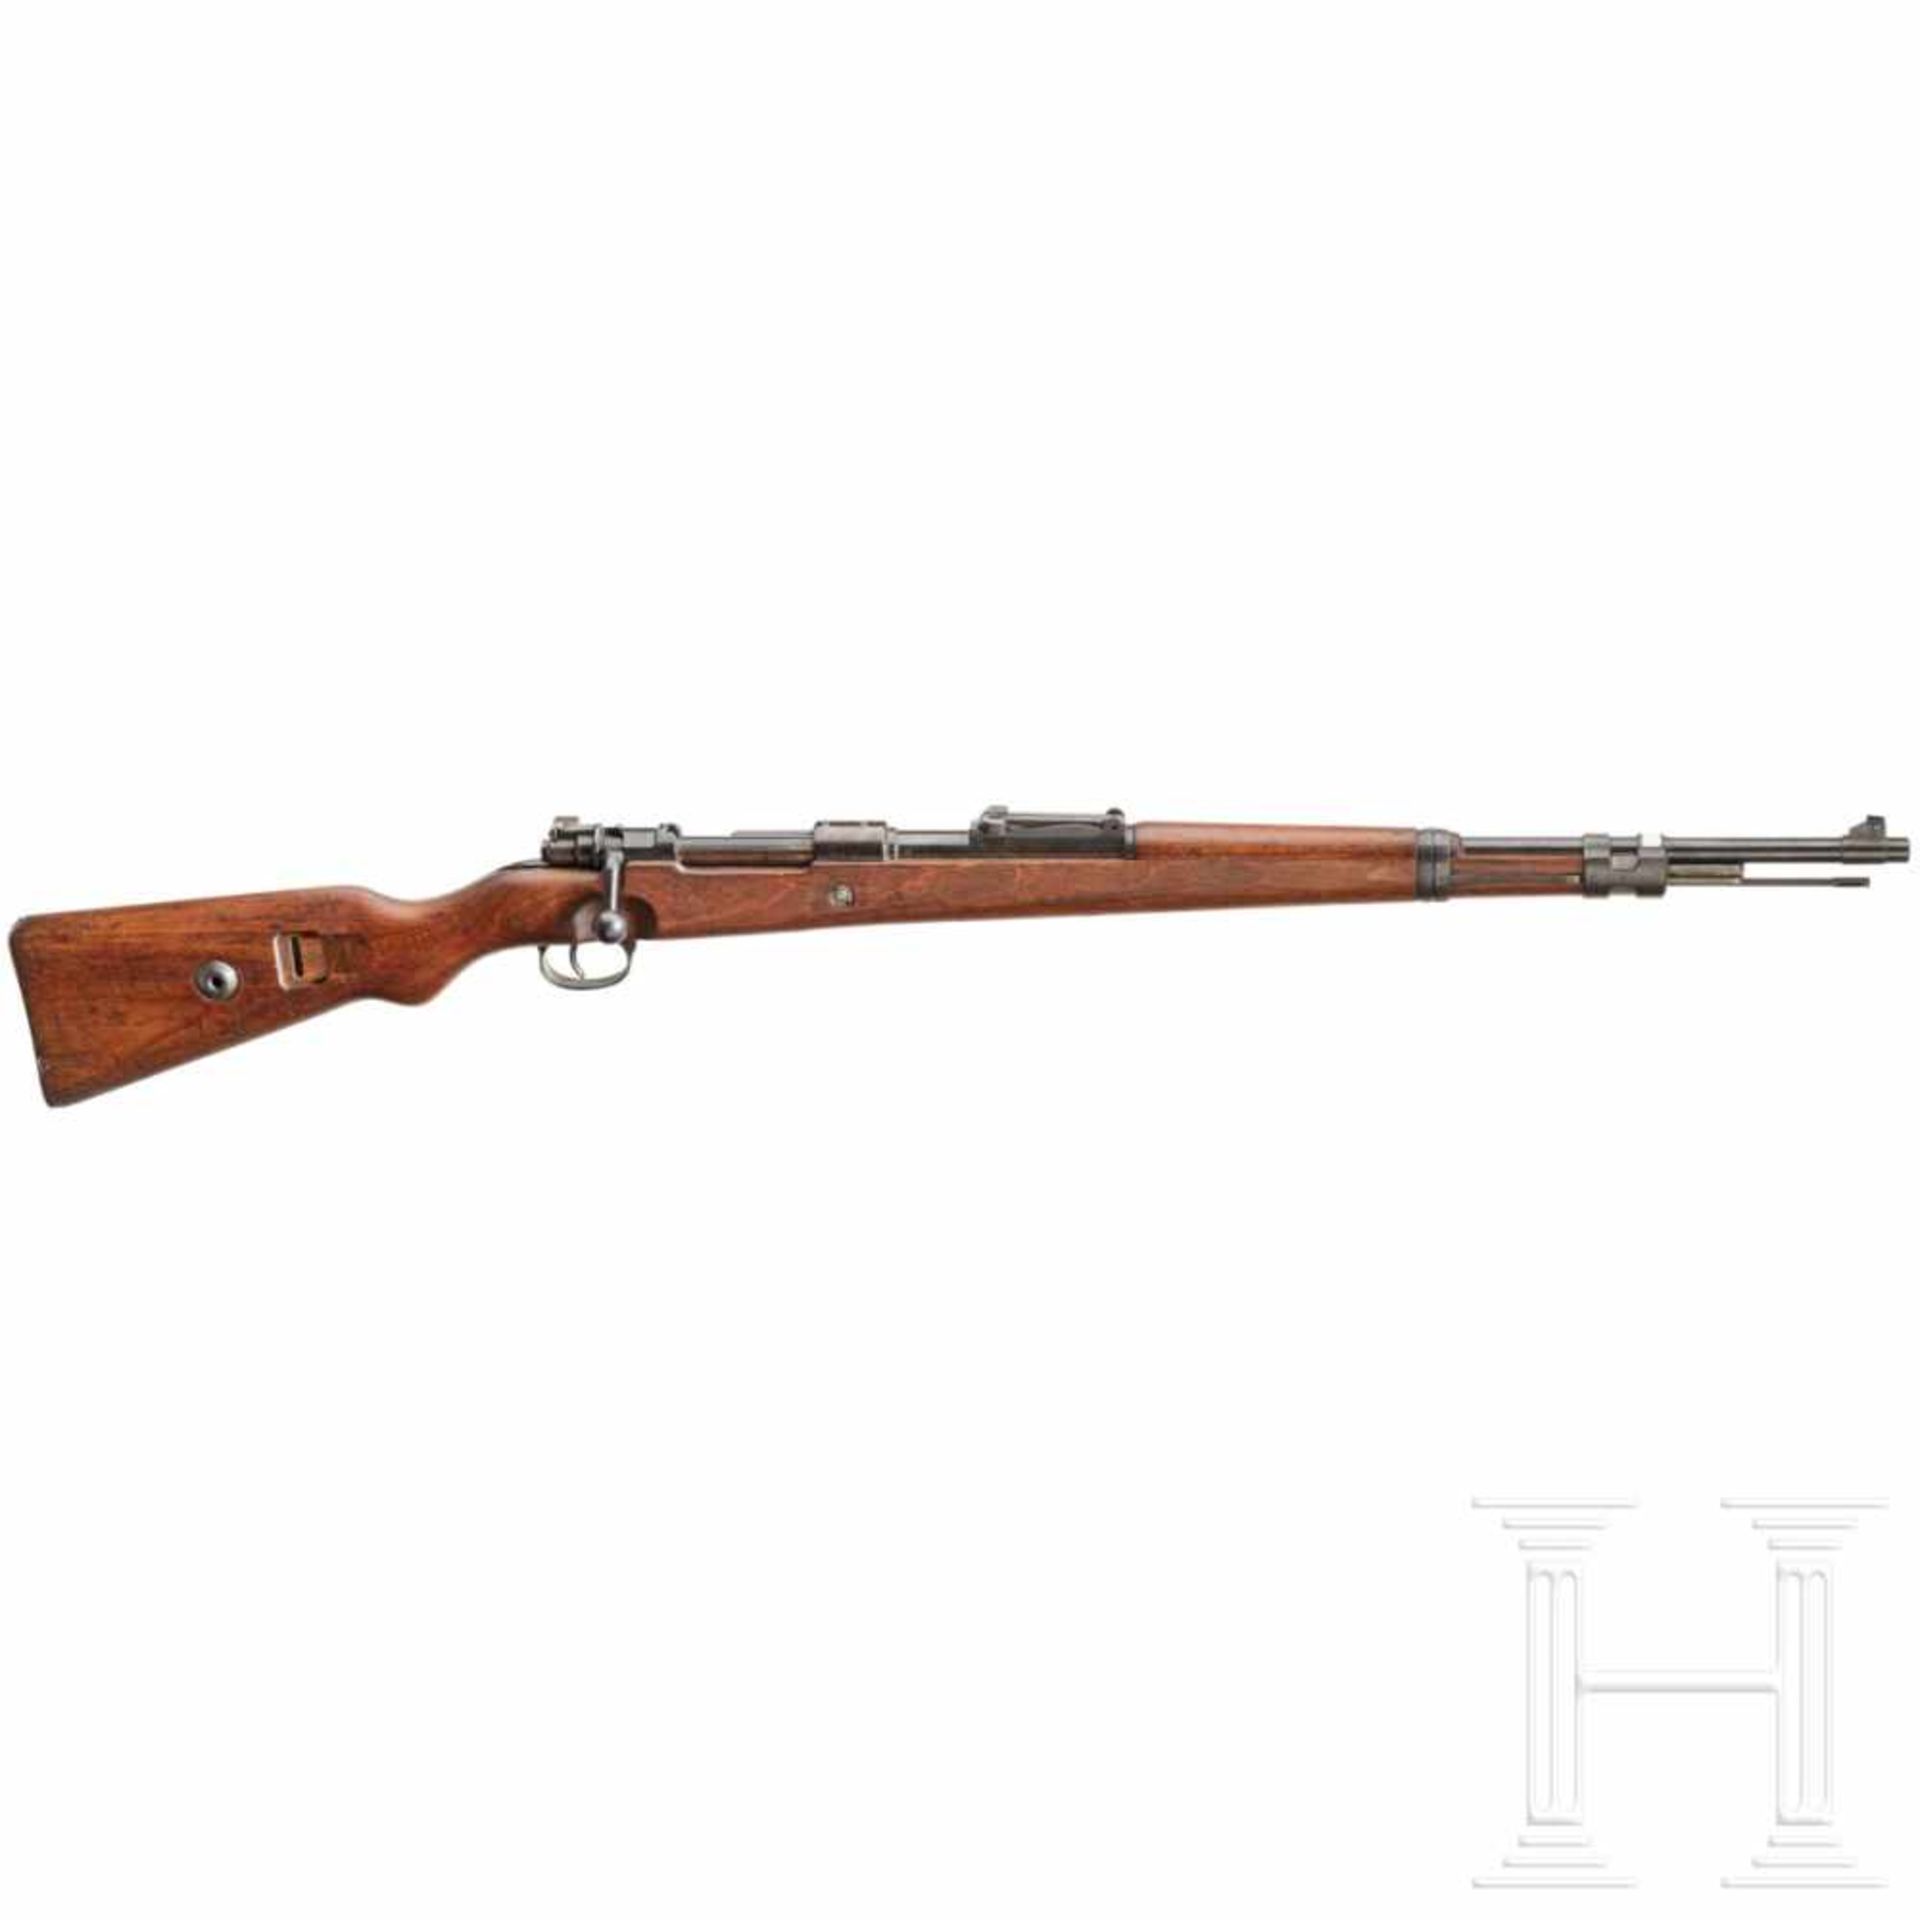 A carbine 98 k, code "237 -1939"Kal. 8x57 IS, Nr. 3140c, nummerngleich. Blanker Lauf.